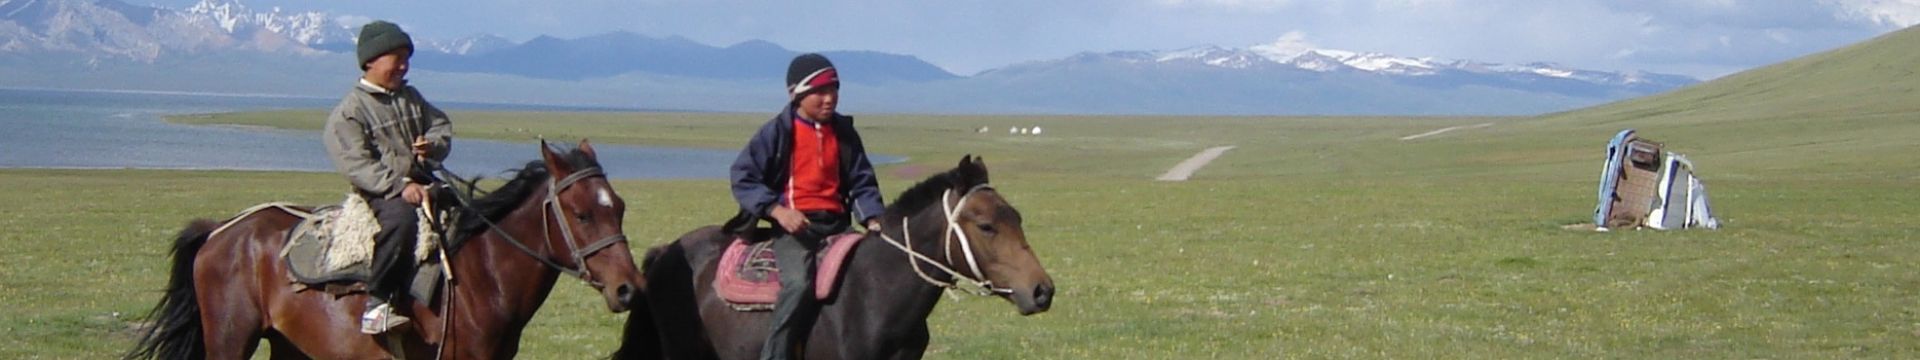 jeunes cavaliers Khyrghiz